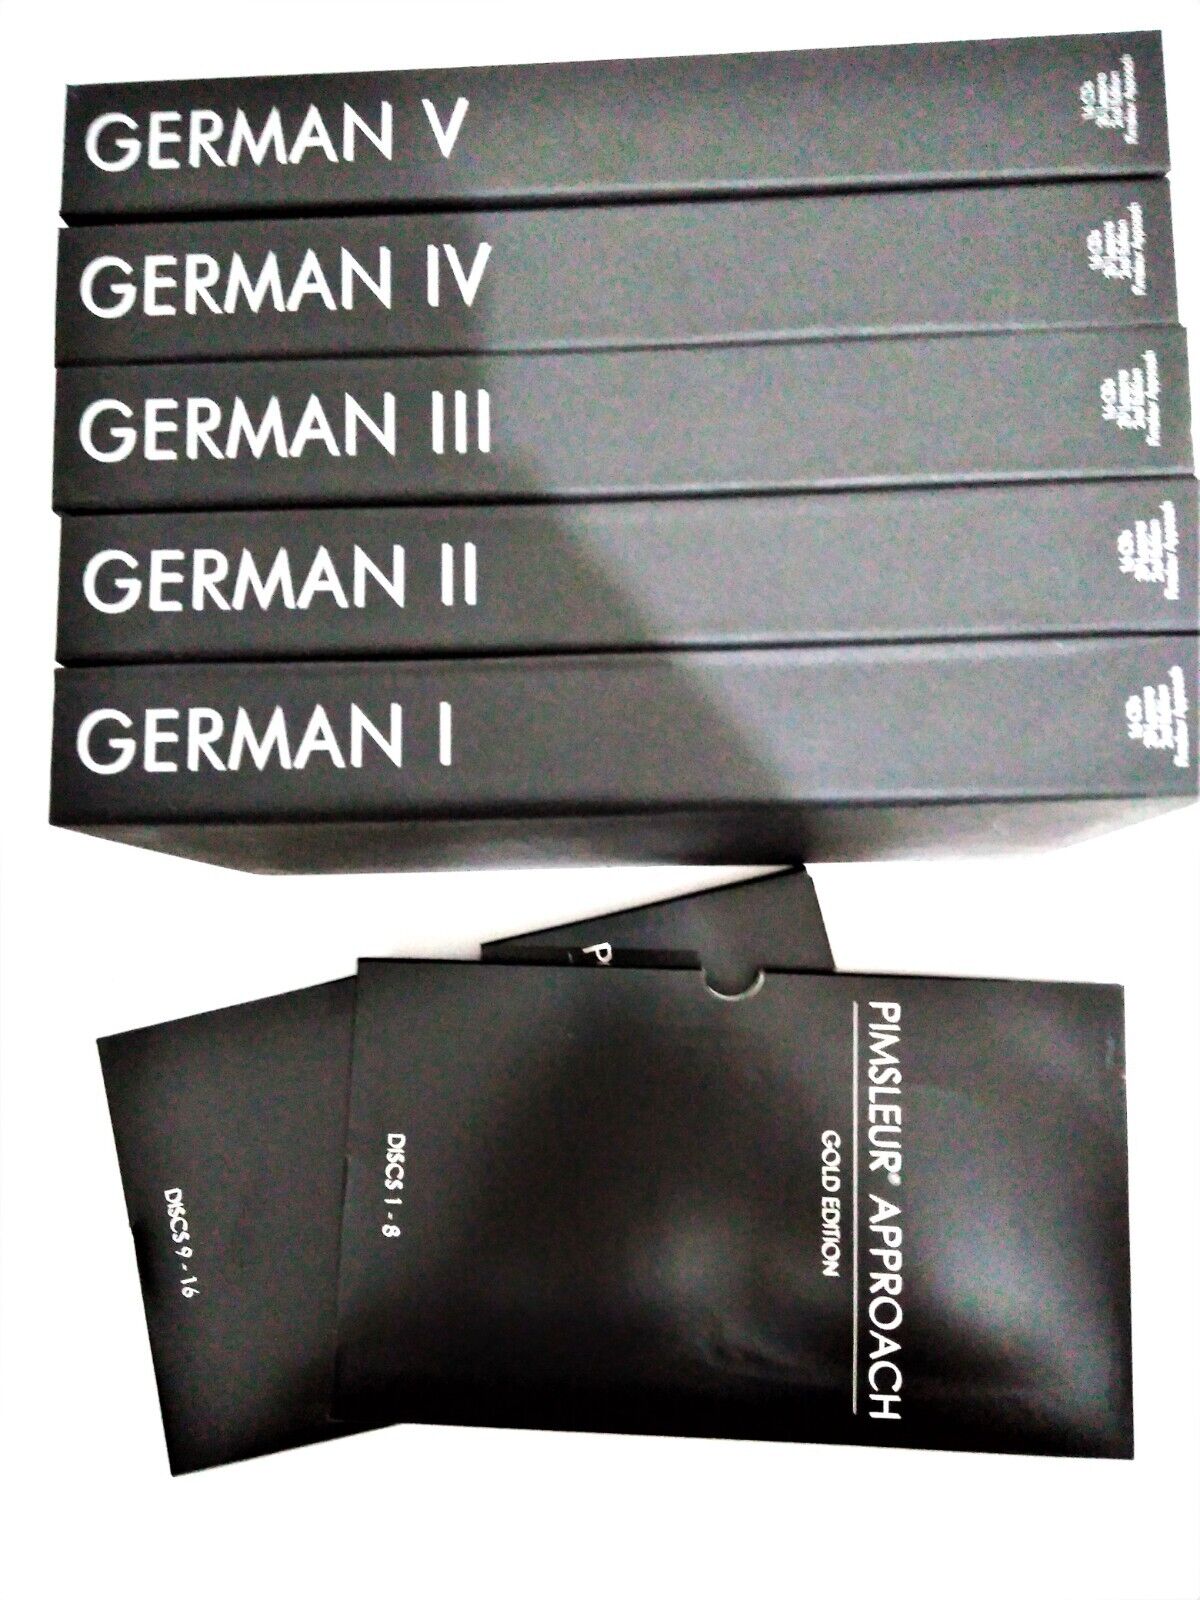 Pimsleur German Language Audio Album Gold Edition Vol. 1-5 on 80 CDs Total